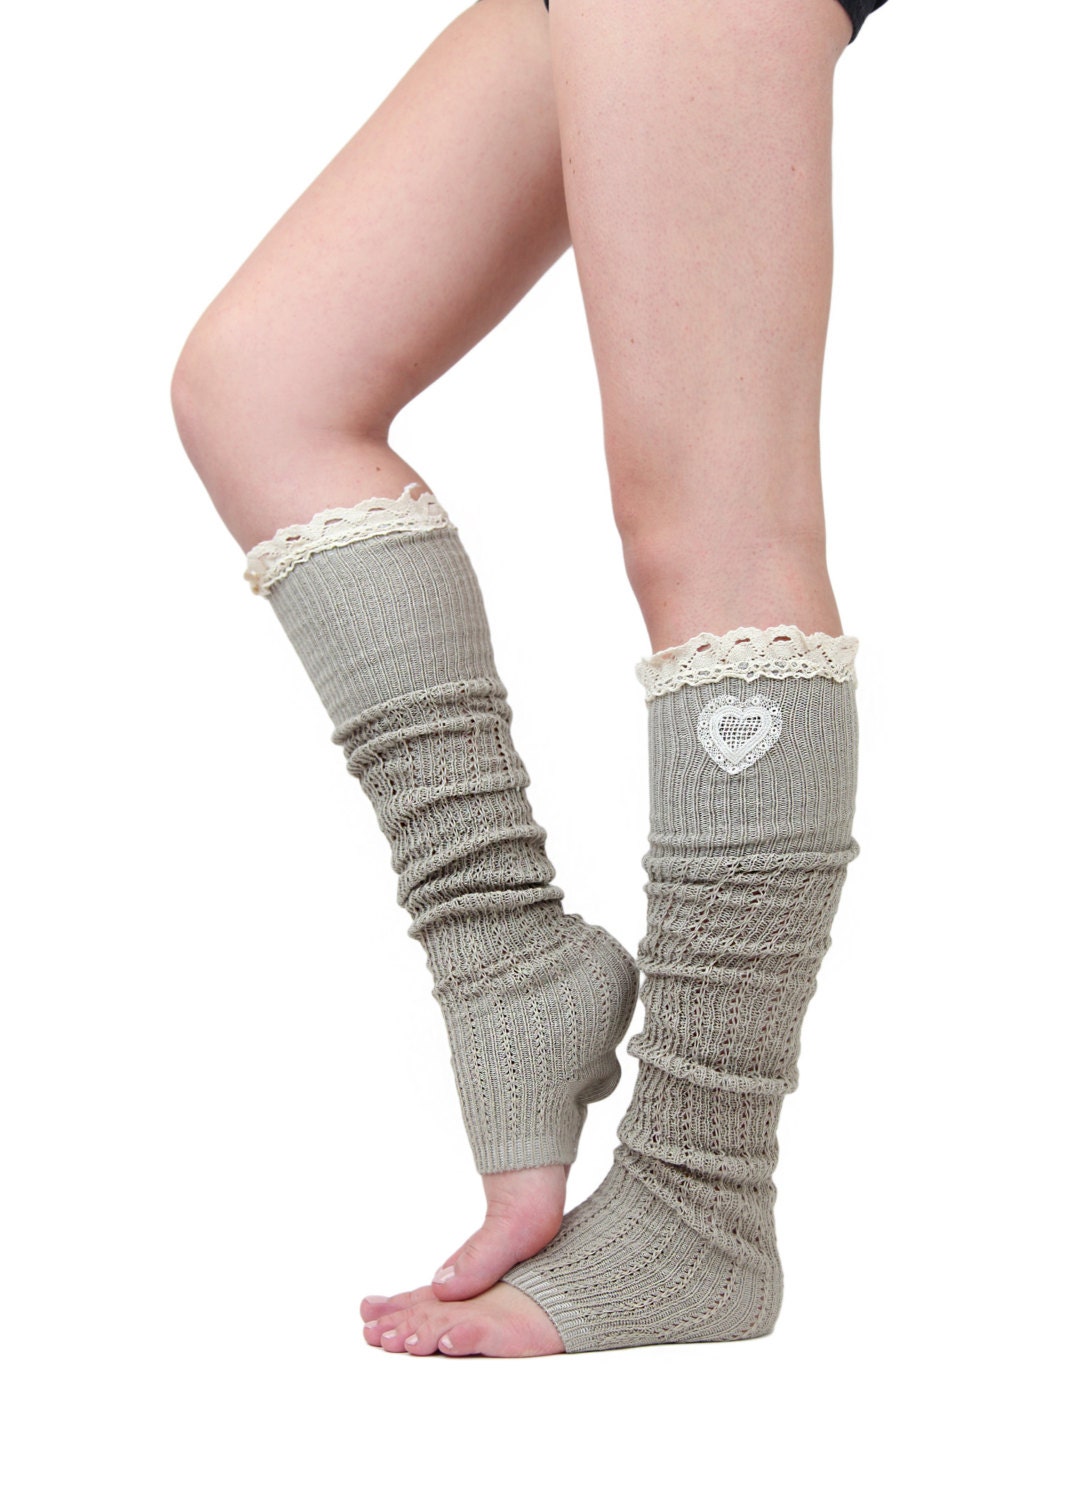 VALENTINES HEART BOOT sock lace leg warmers, oatmeal taupe socks, lace knit socks - gertiebaxter